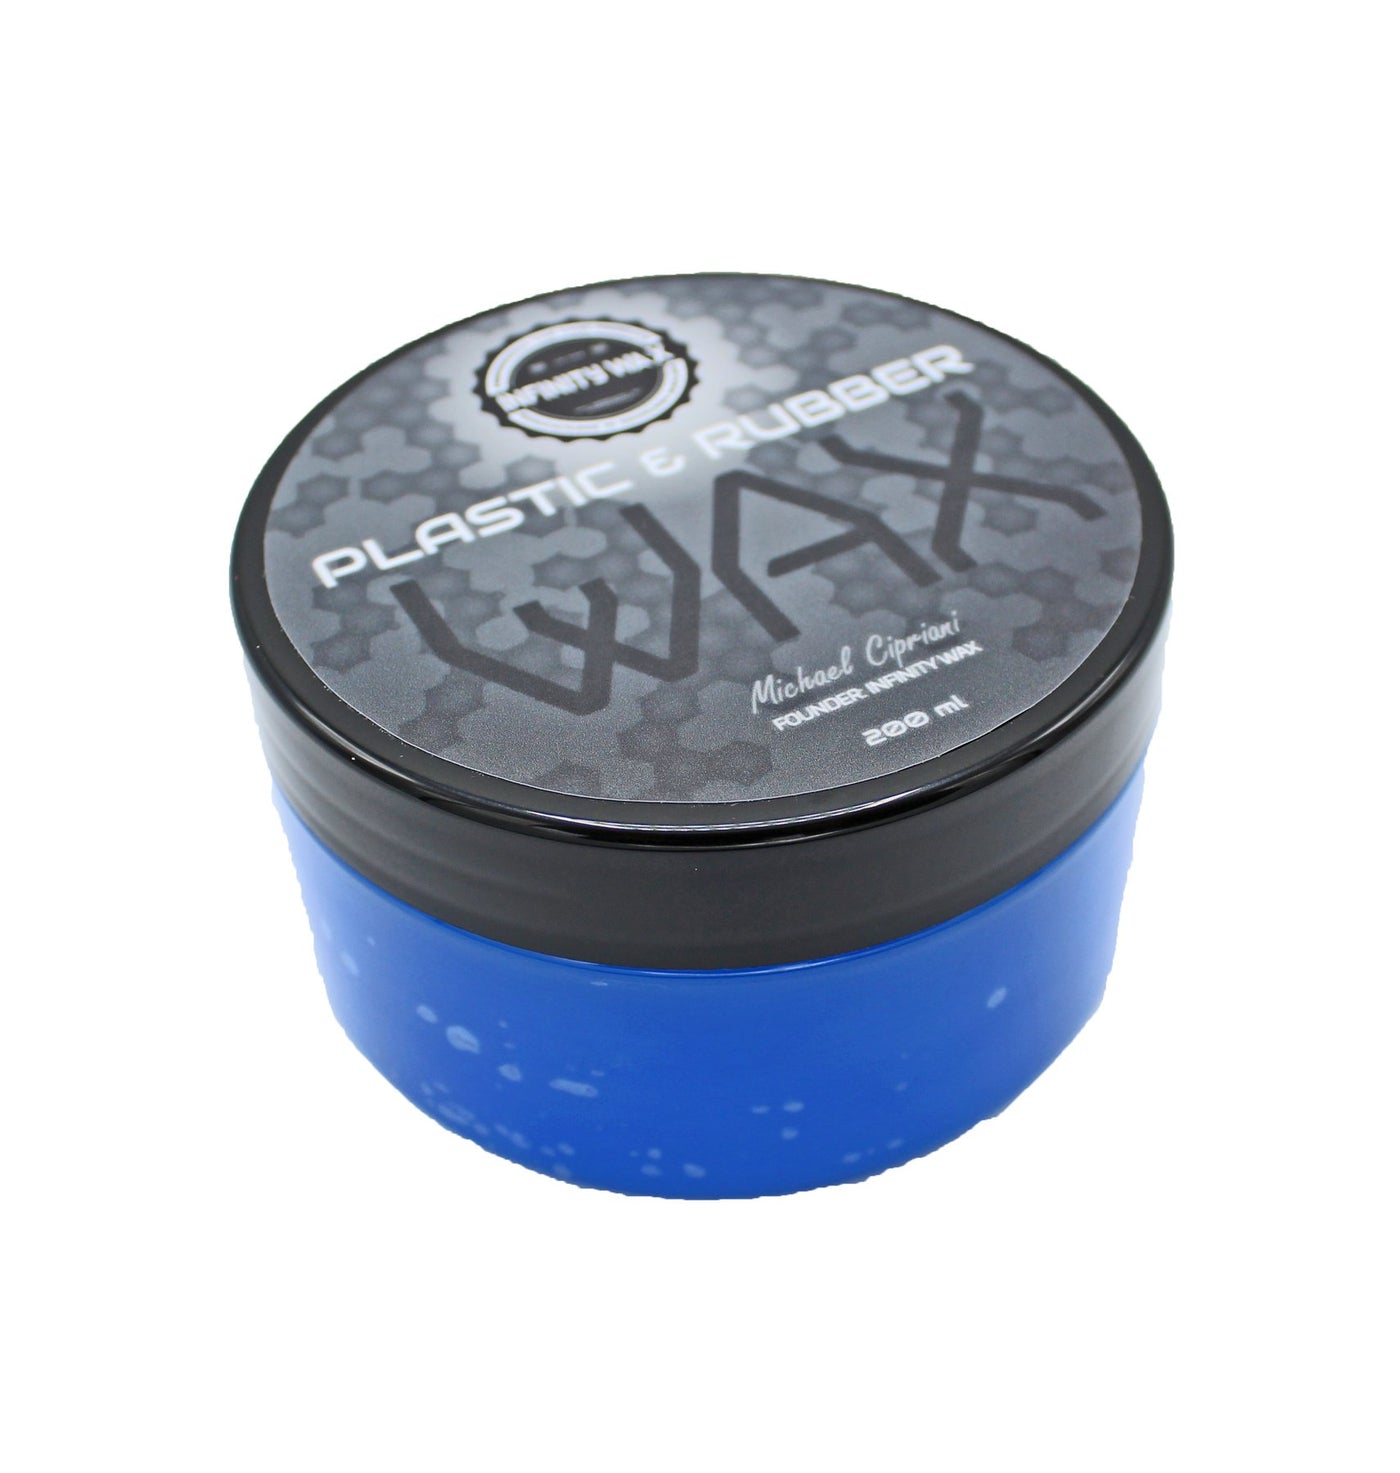 Rubber & Plastic Wax - 200g